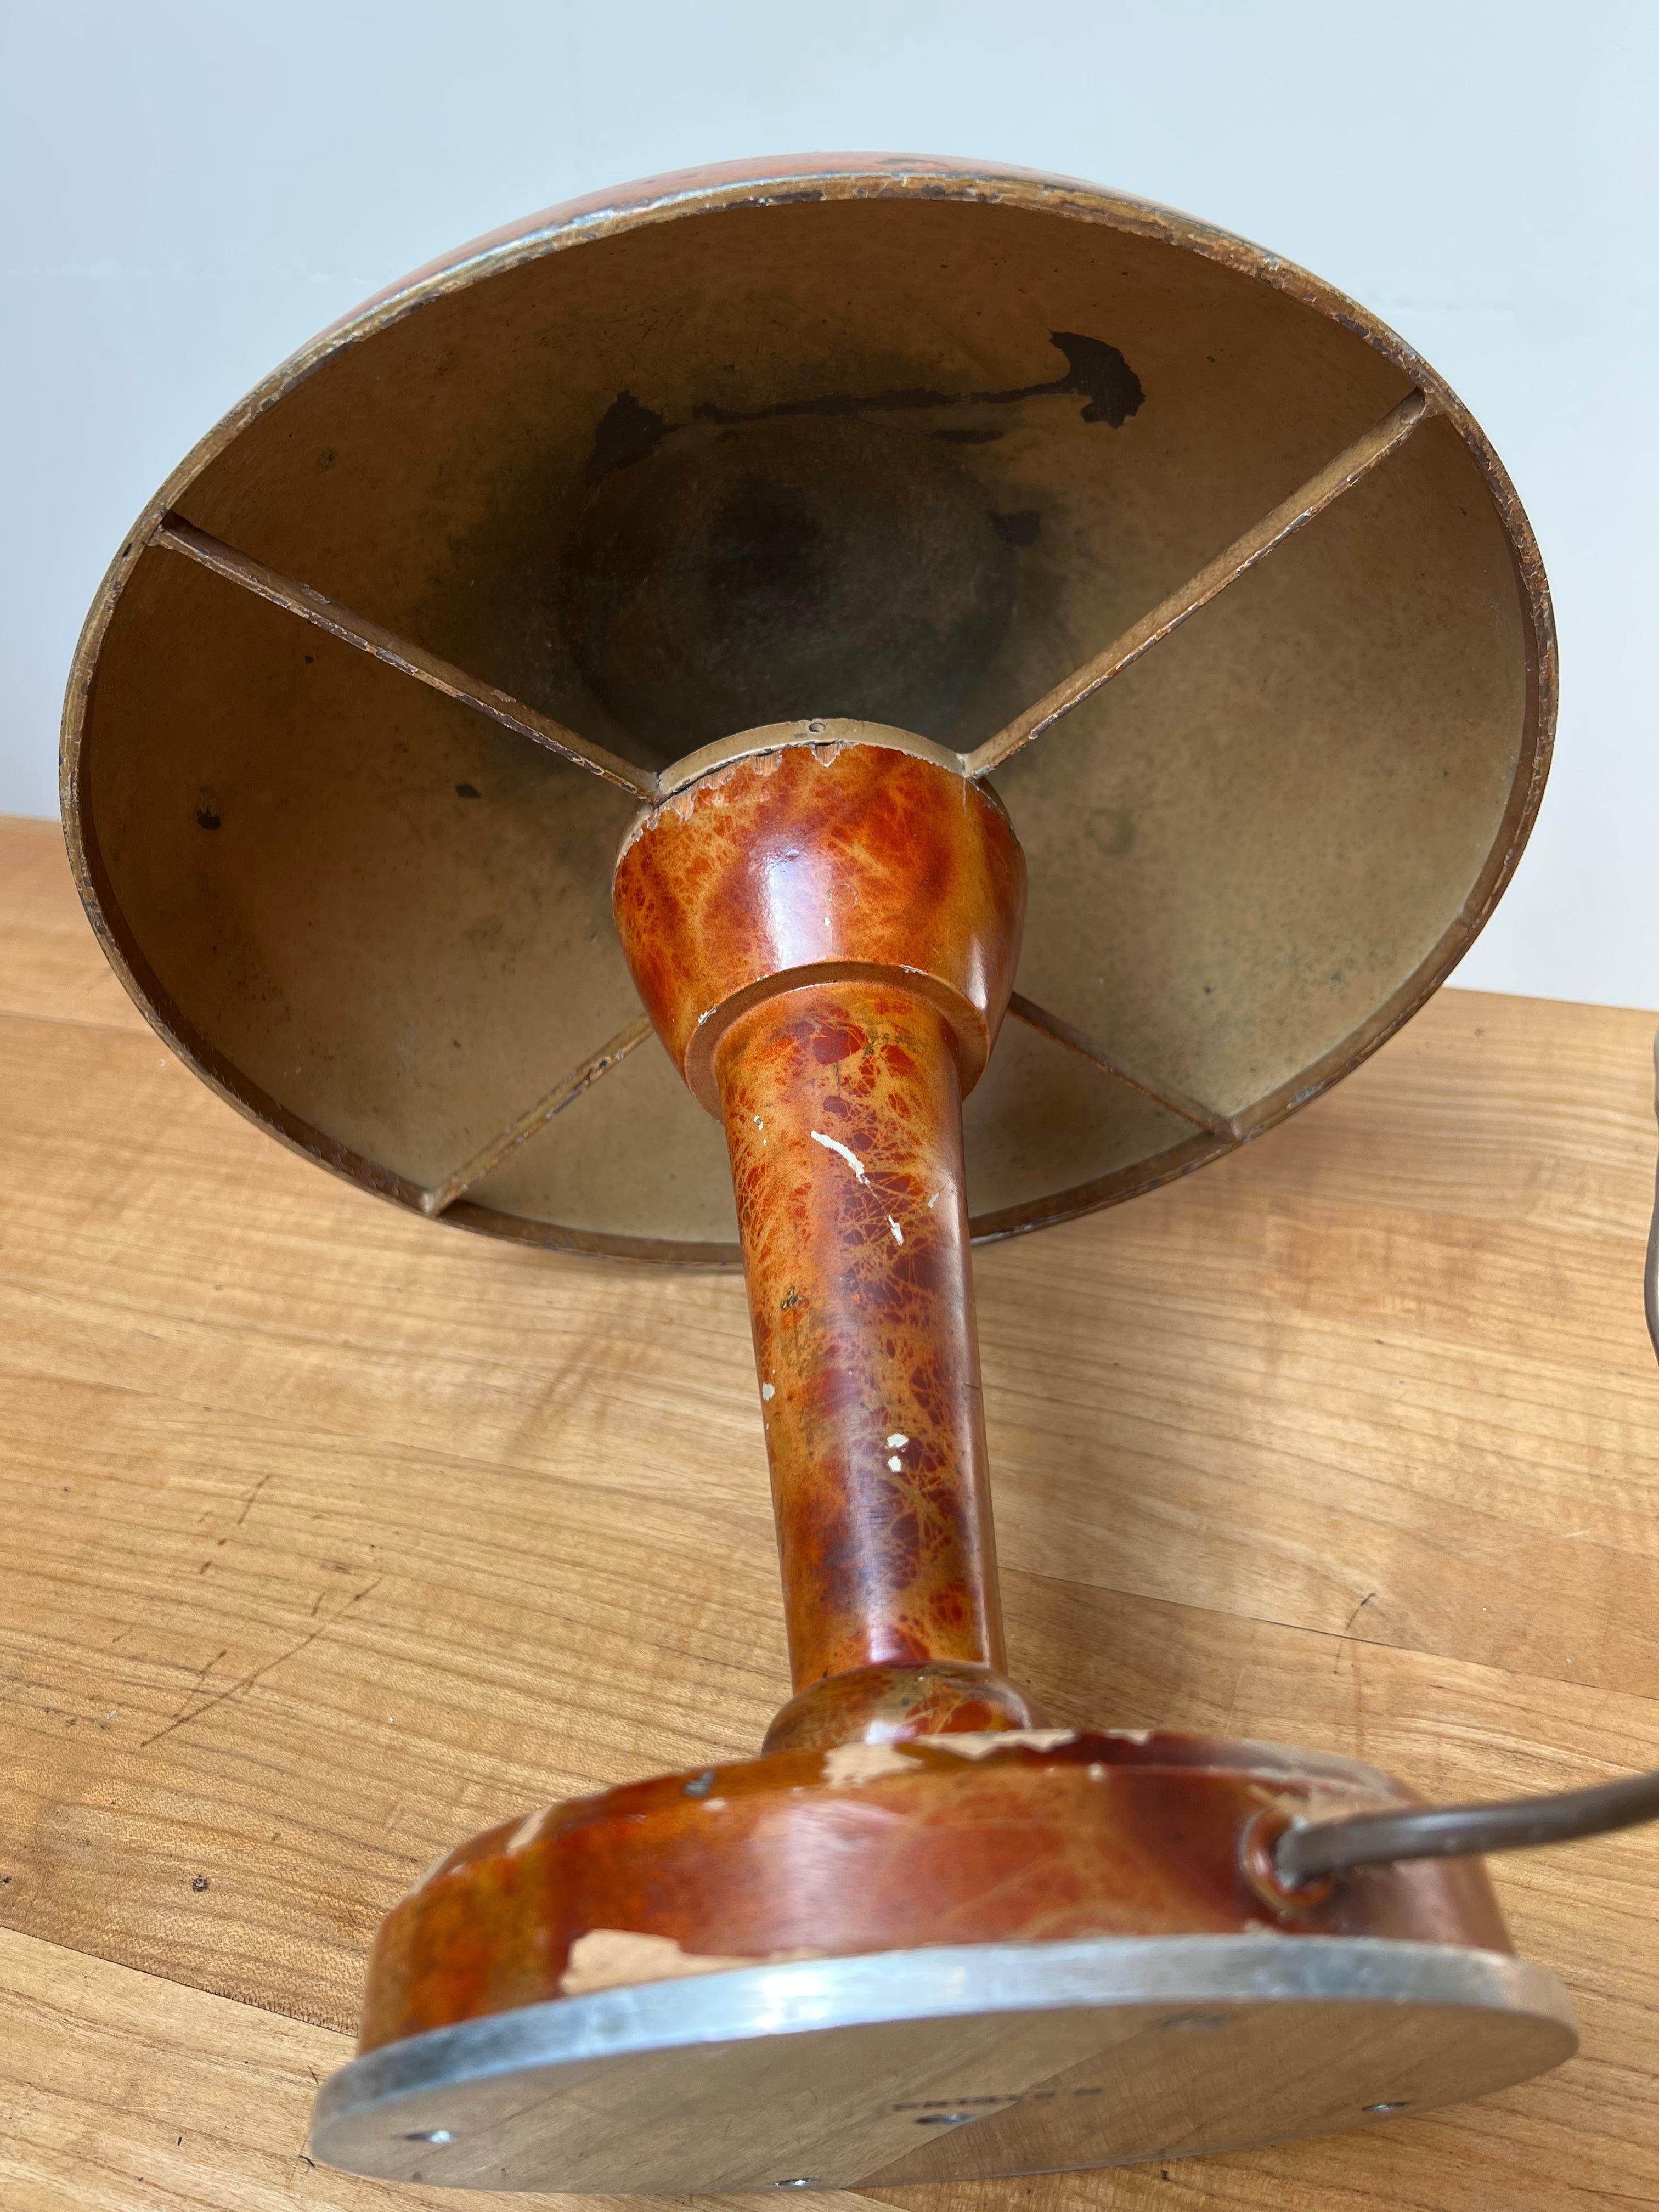 Rare Brass, Metal & Wood Art Deco Mushroom Hat Table or Desk Lamp Sign M. Sabino For Sale 4